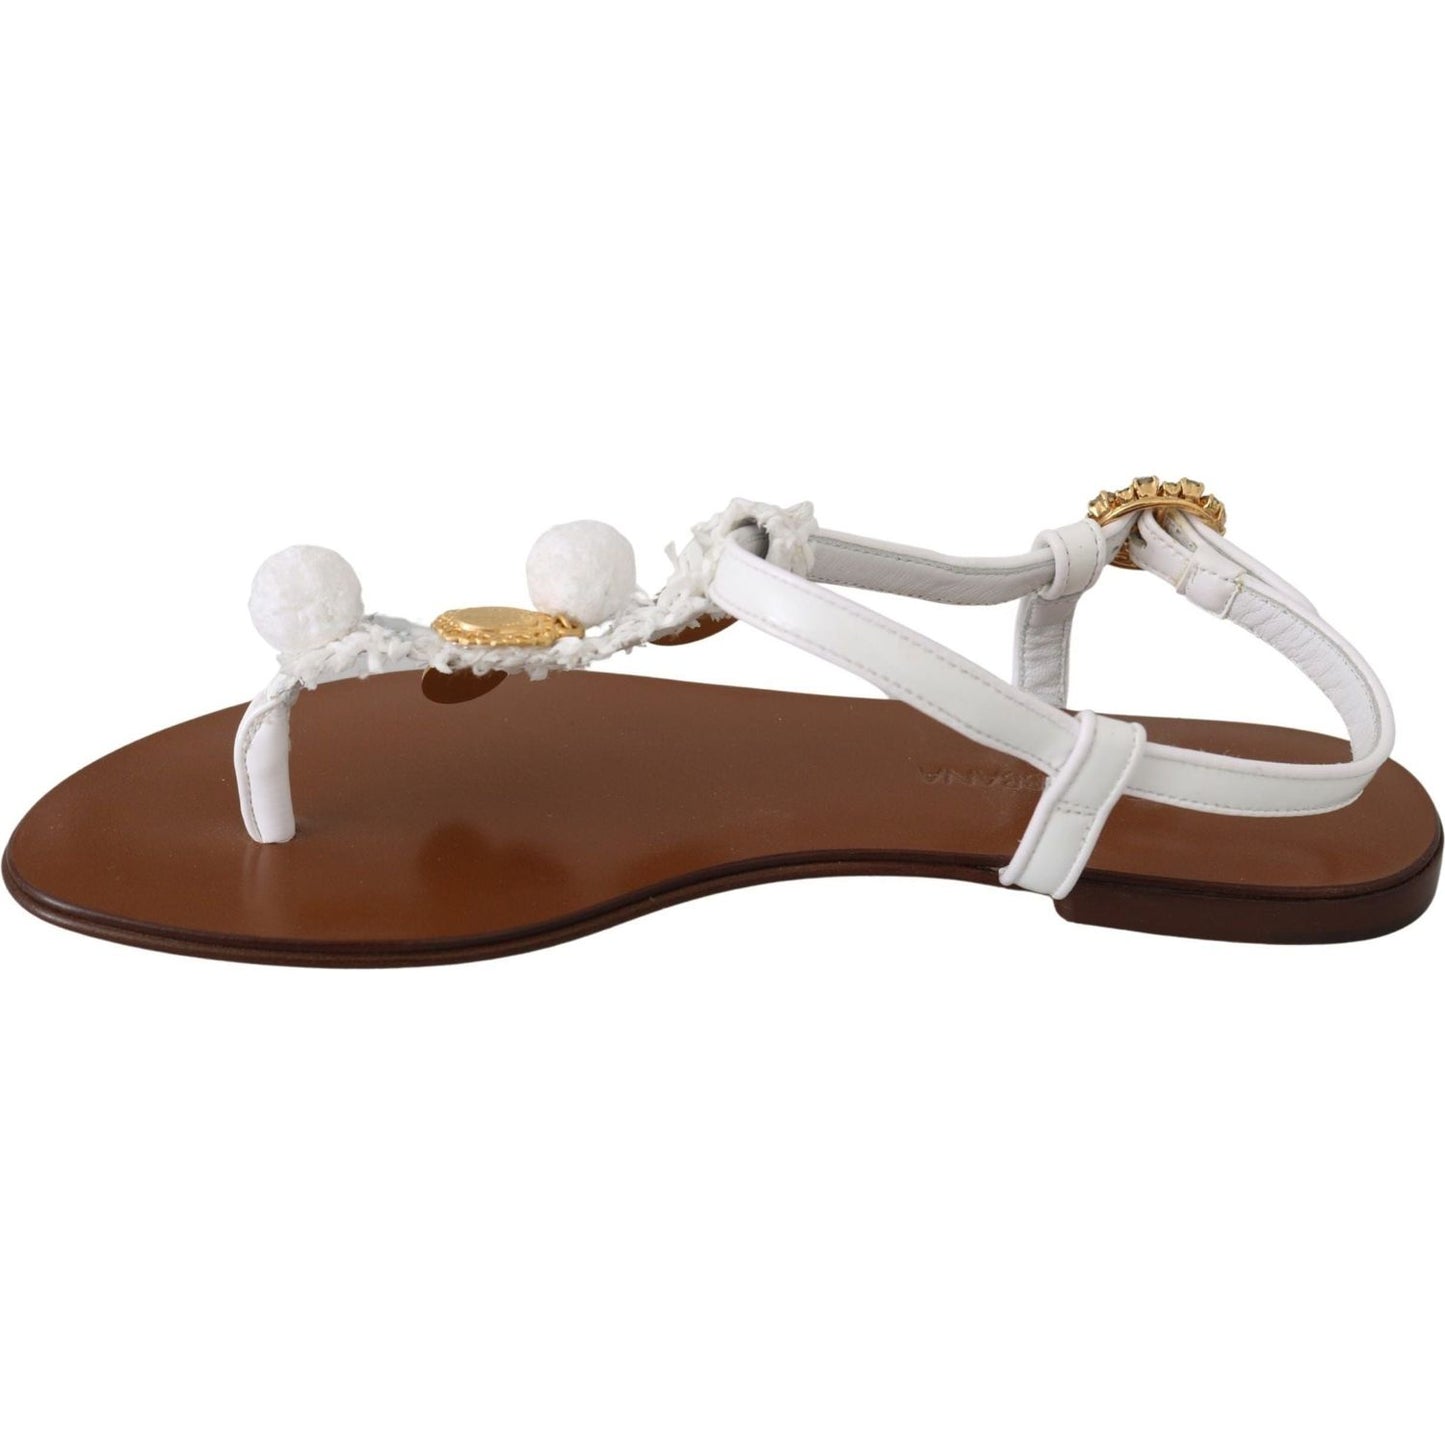 Dolce & Gabbana Pom Pom Flip Flop Ankle Strap Flats white-leather-coins-flip-flops-sandals-shoes